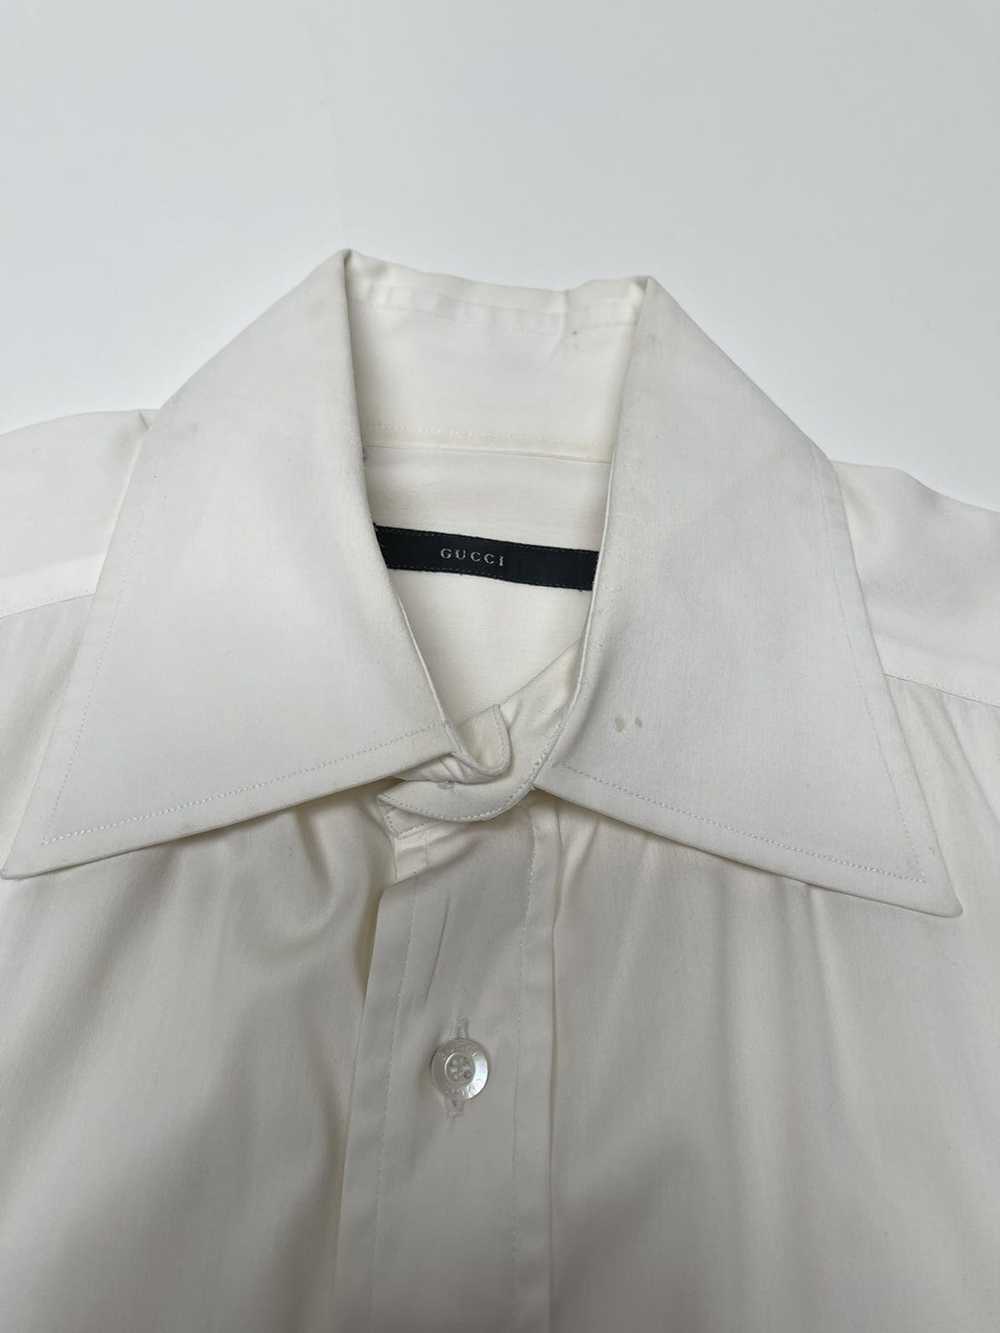 Gucci Vintage Gucci Button Up Shirt - image 7